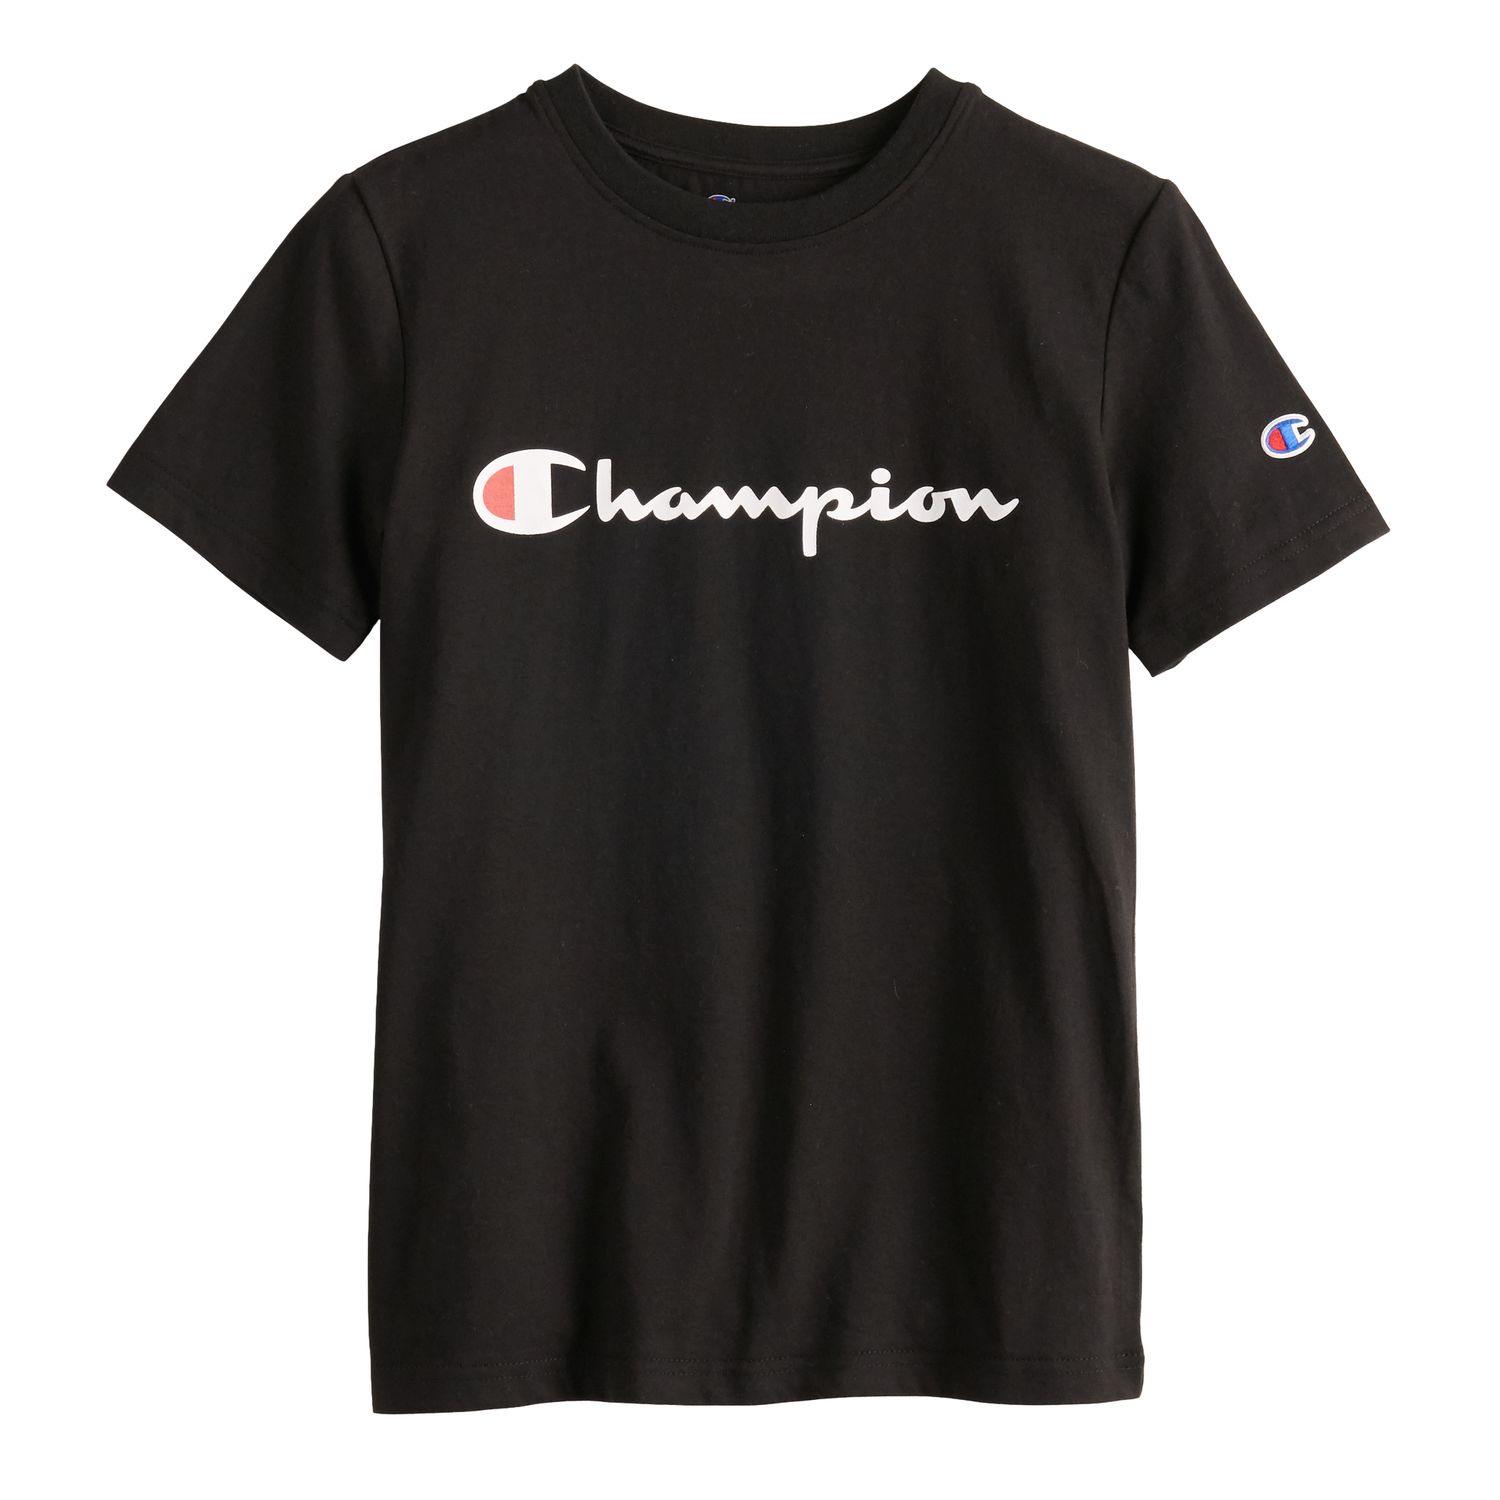 champion shirts & tops